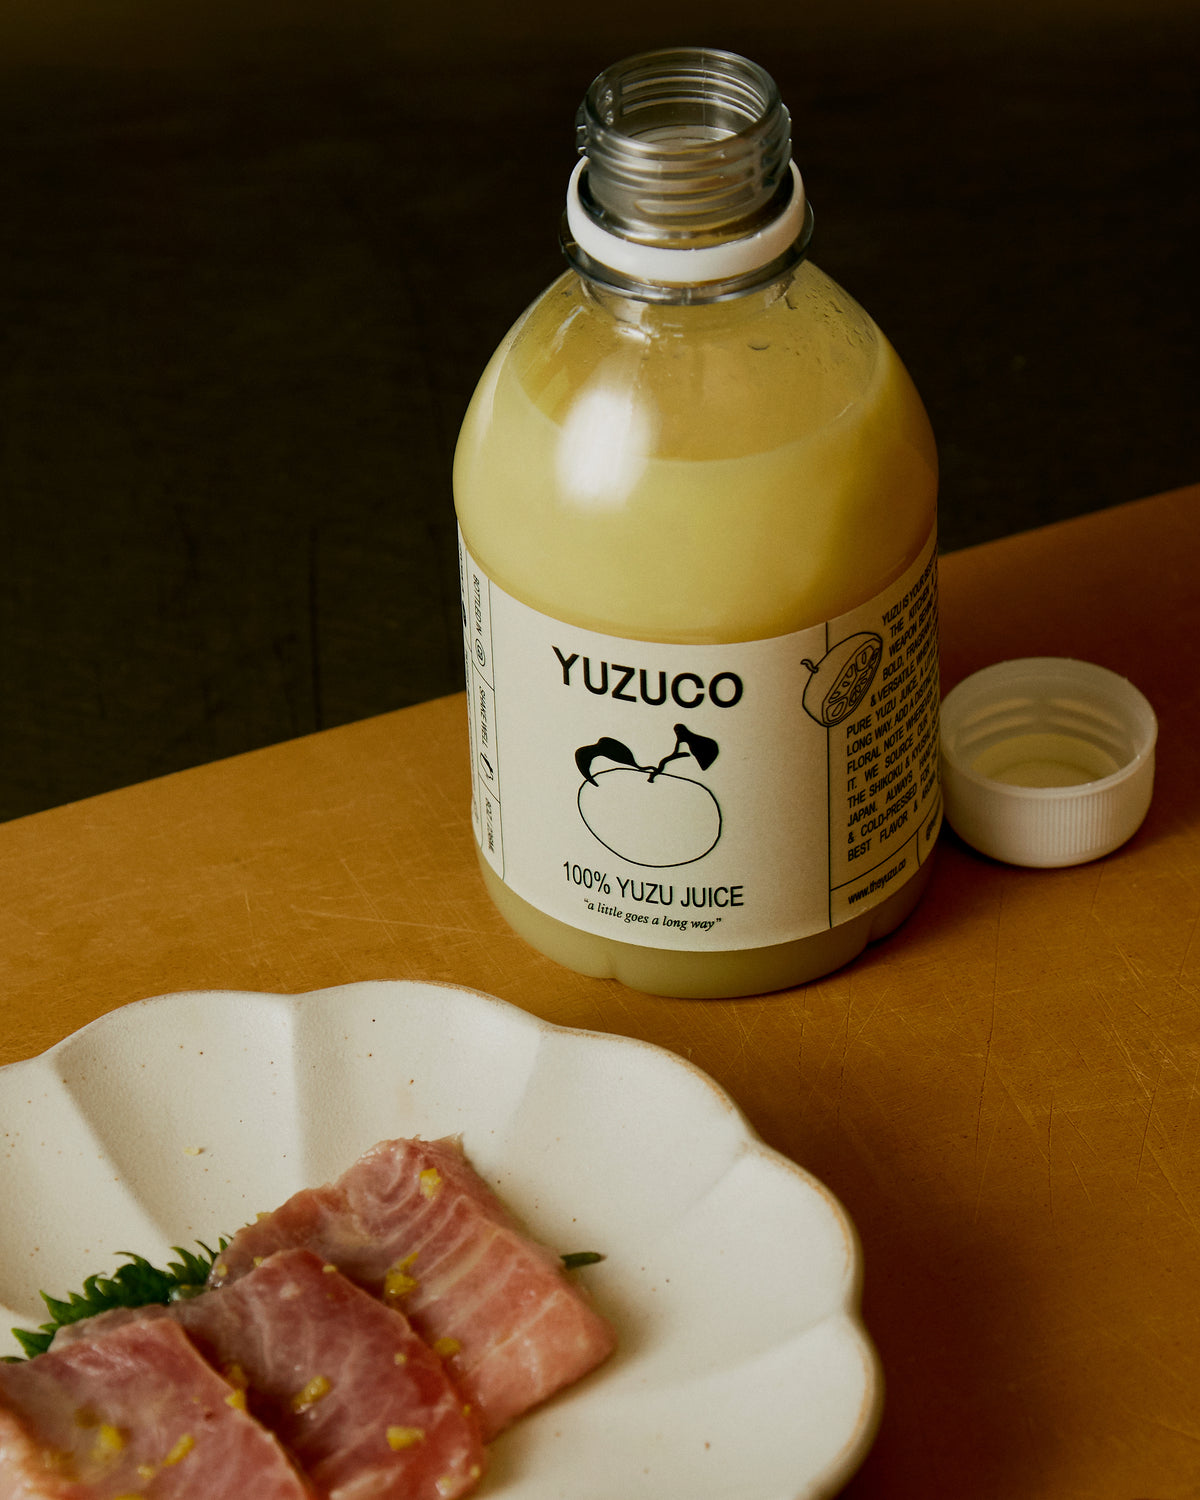 Yuzuco 100% Yuzu Juice on counter next to tuna sashimi